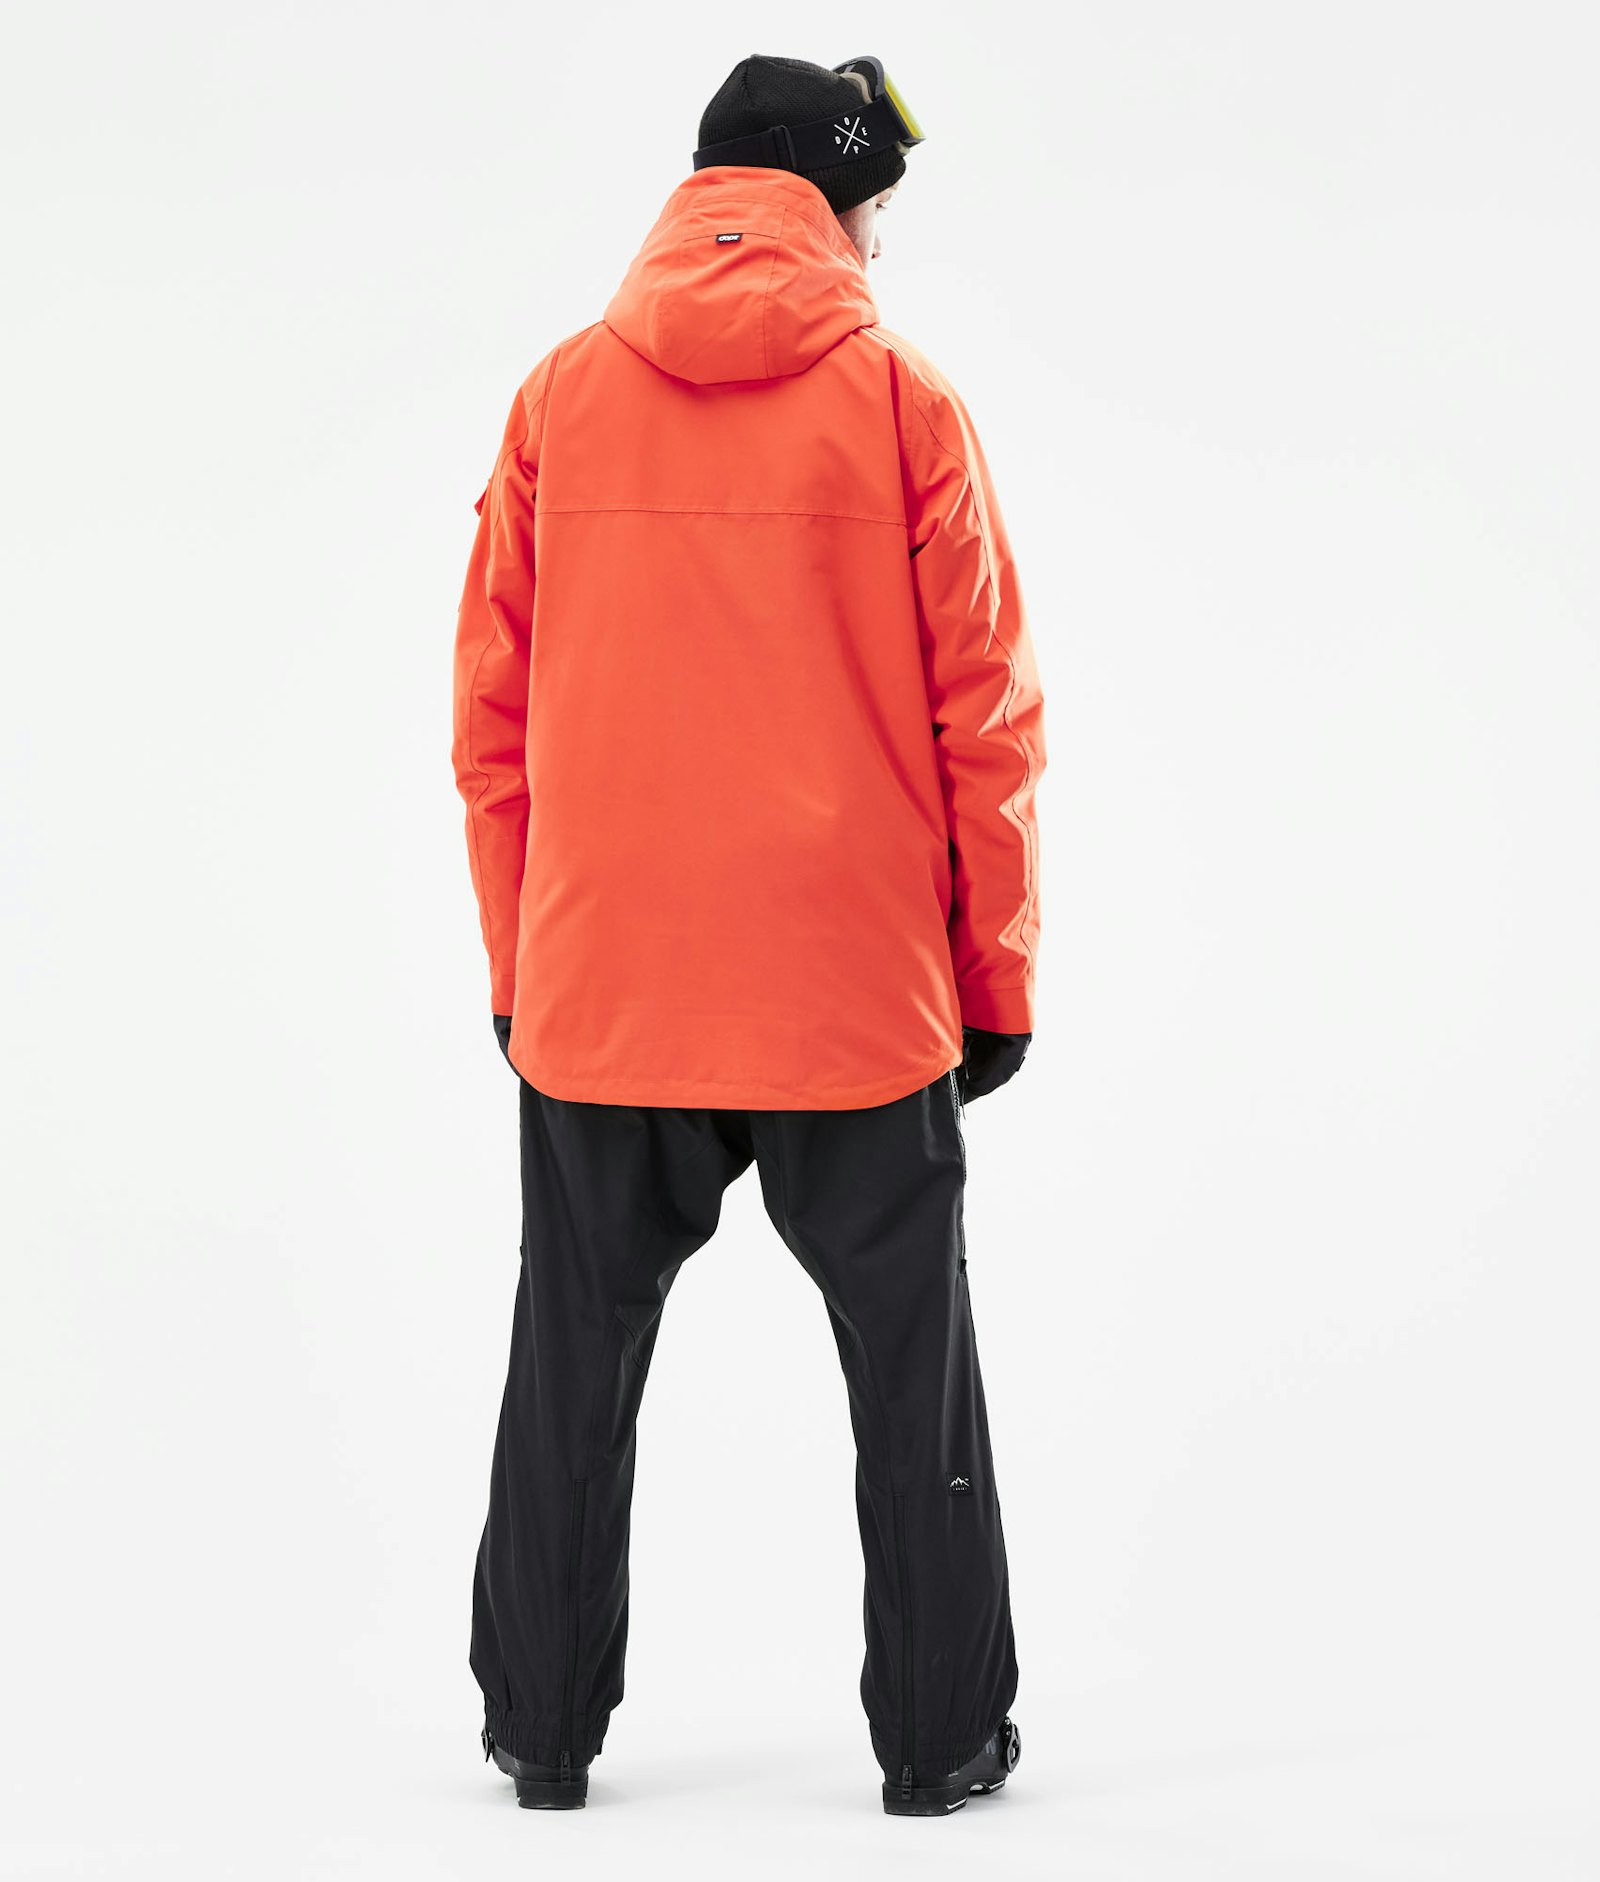 Akin 2021 スキージャケット メンズ Orange